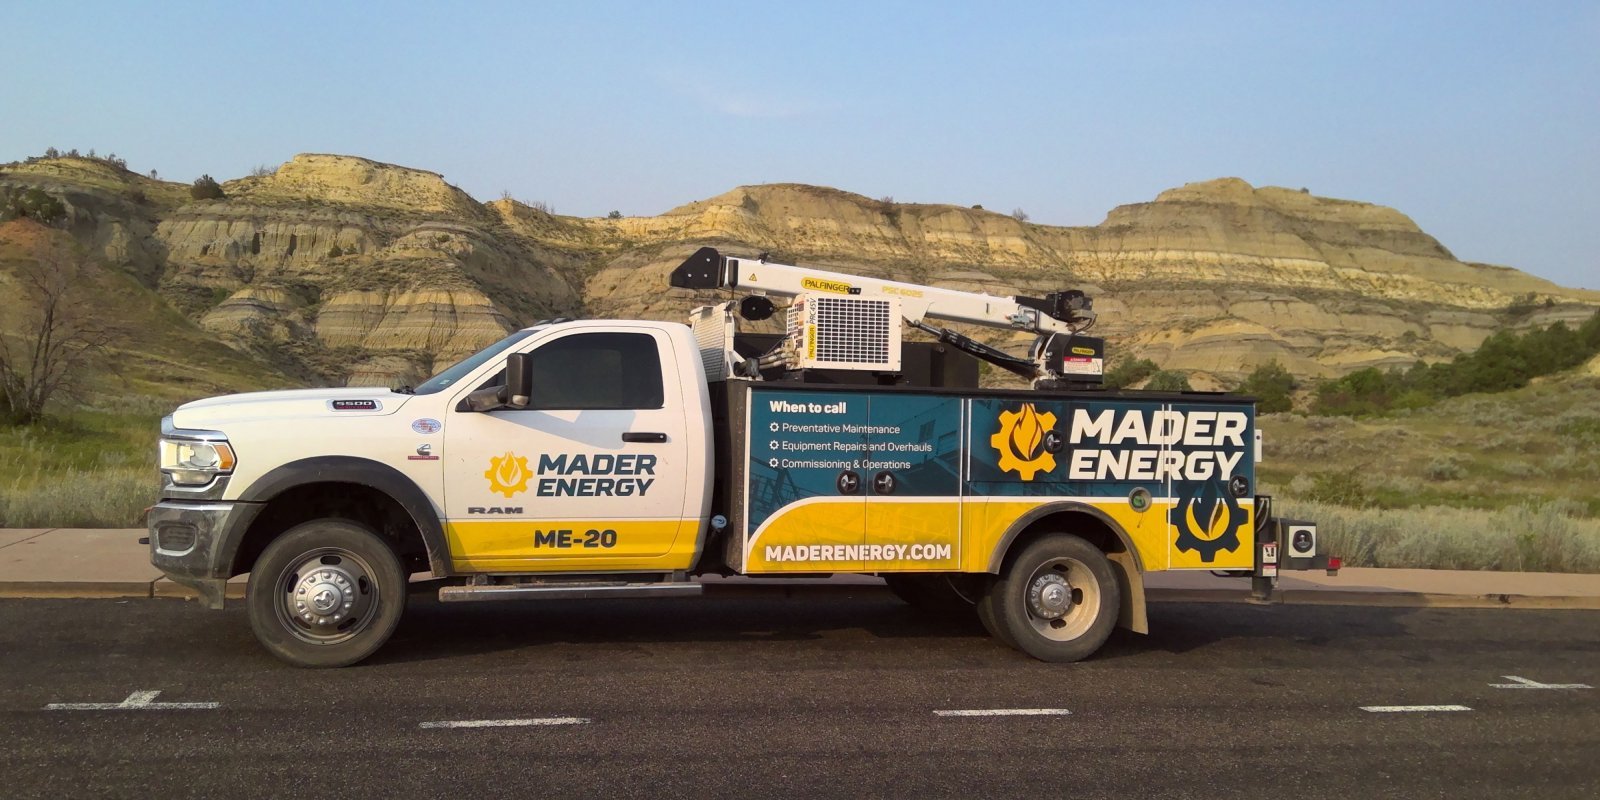 Mader Energy – Experts in Gas Compressor & Power Gen Equipment Maintenance